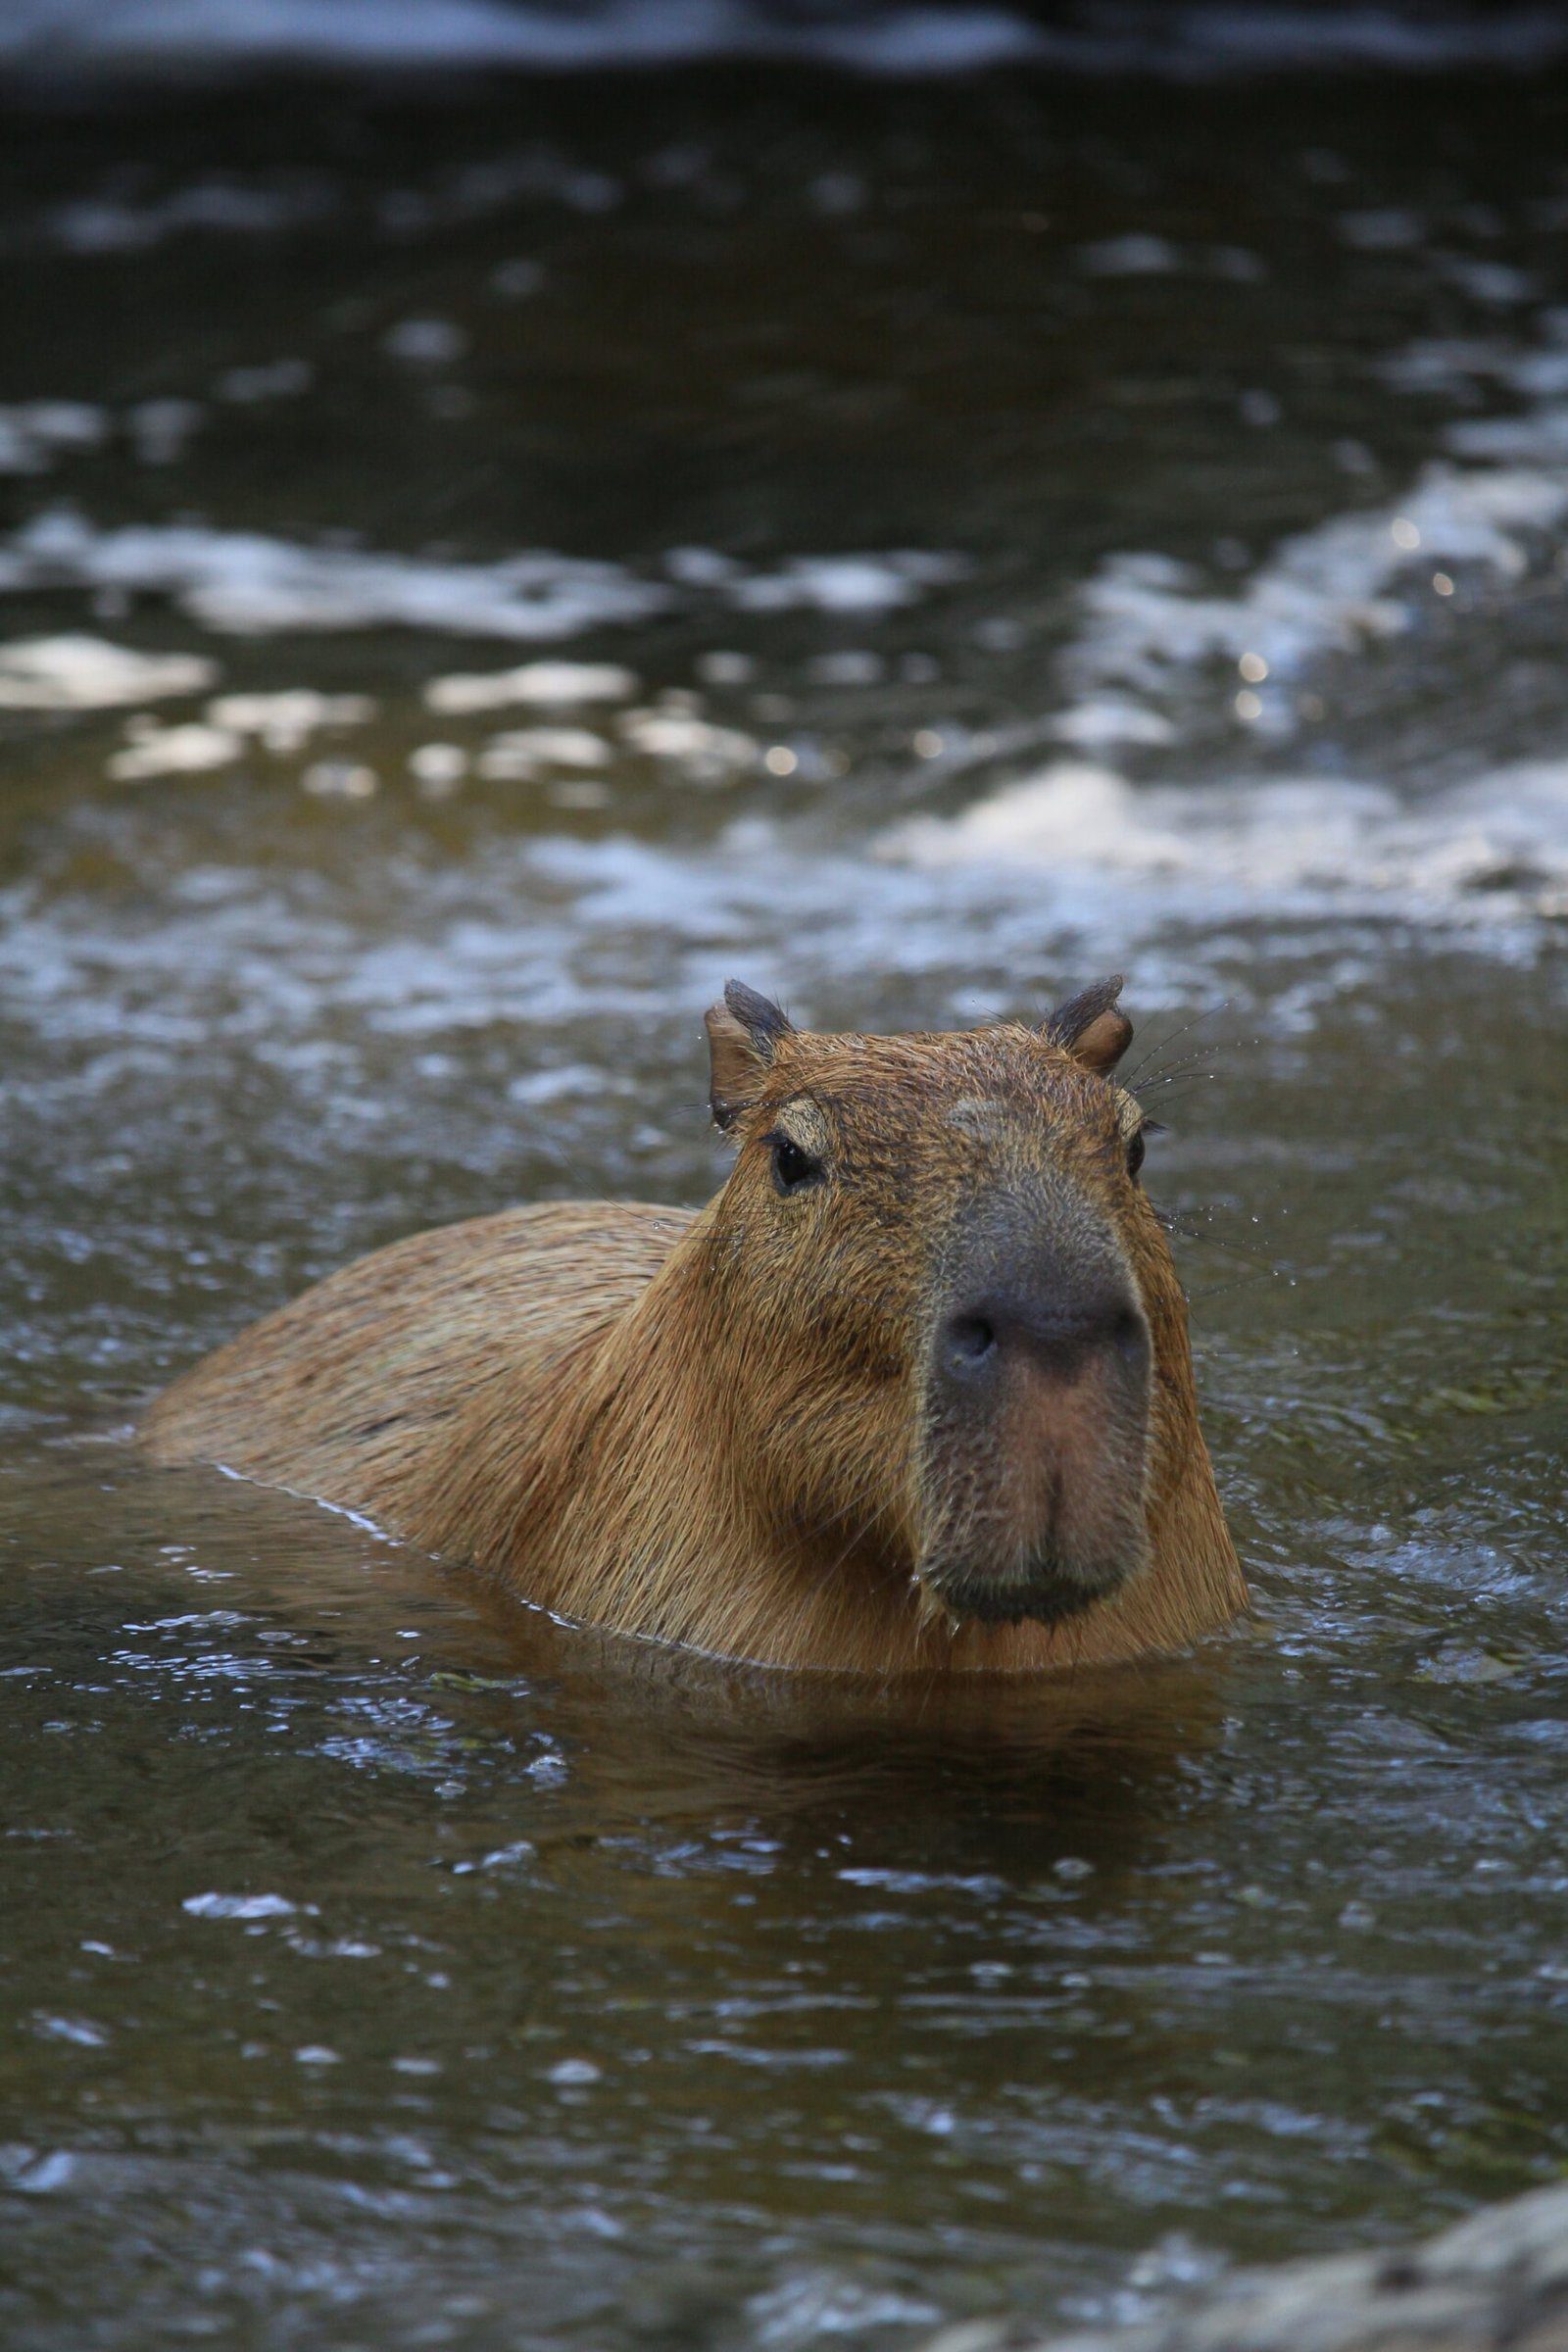 The Capybara with an Orange Crown